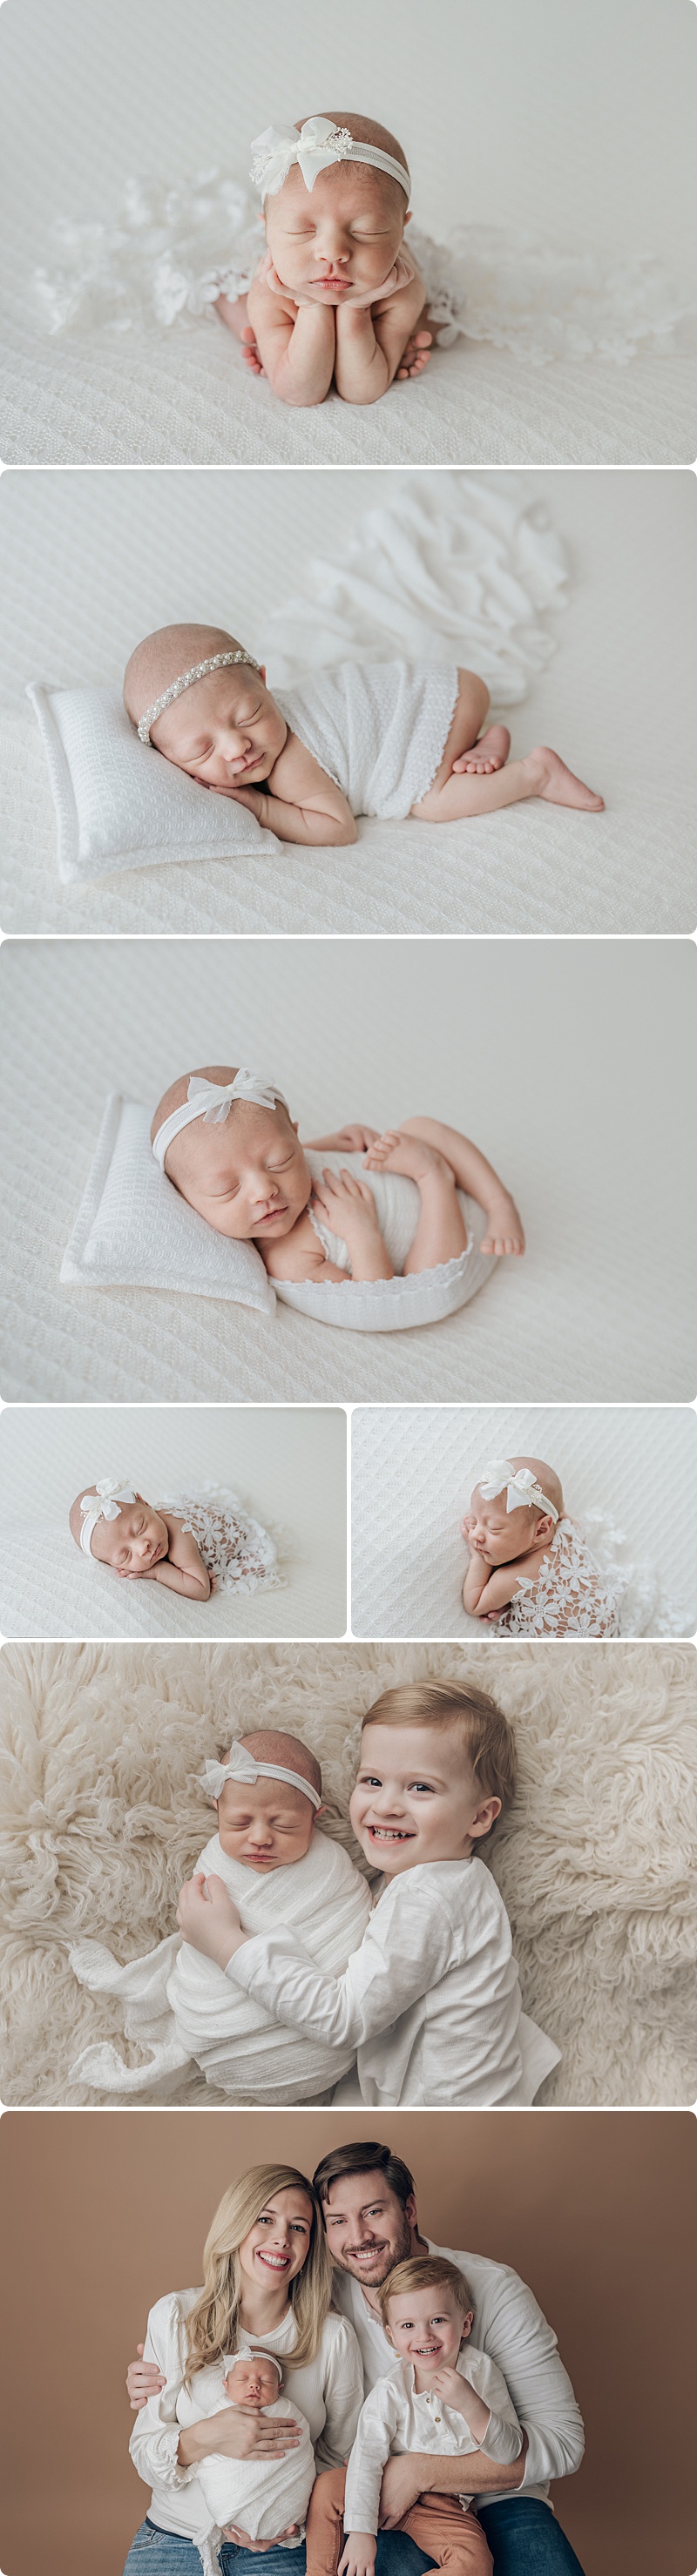 Beka Price Photography,baby girl,bppbabies,newborn baby,newborn photographer,newborn session,